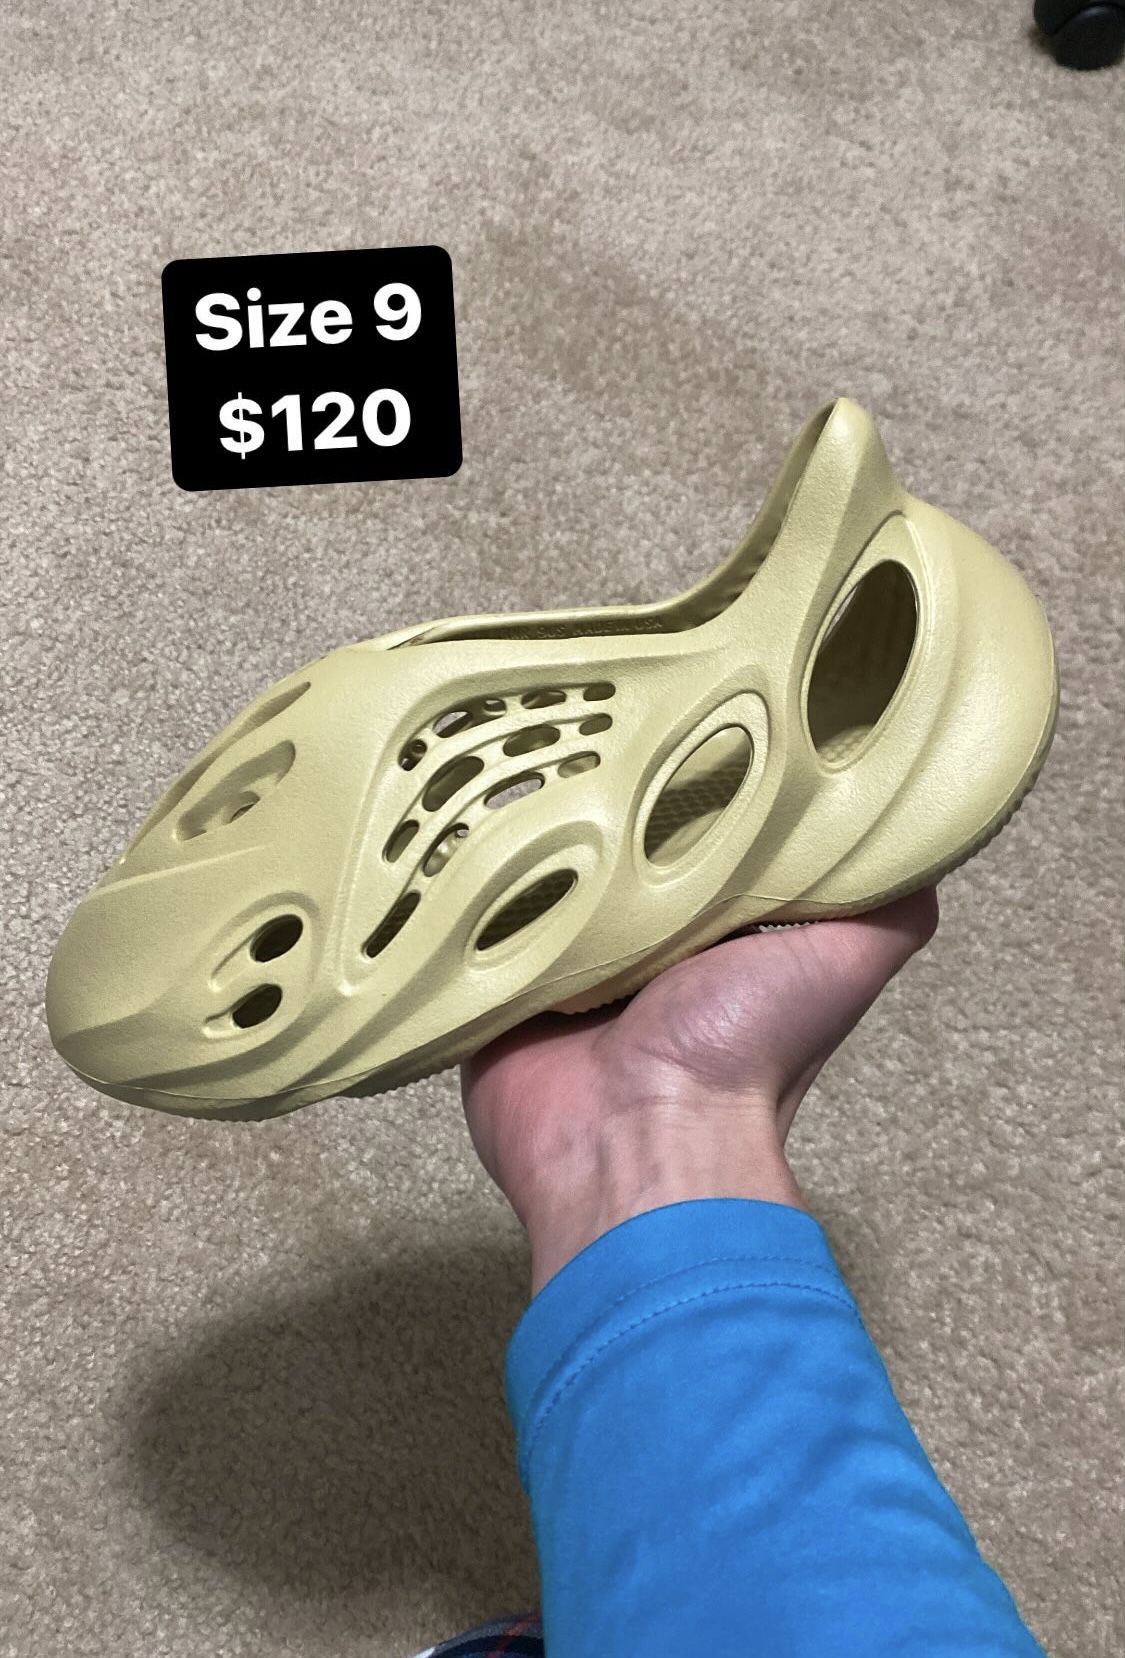 Size 9 - Adidas Yeezy Foam Runner Sulfur 